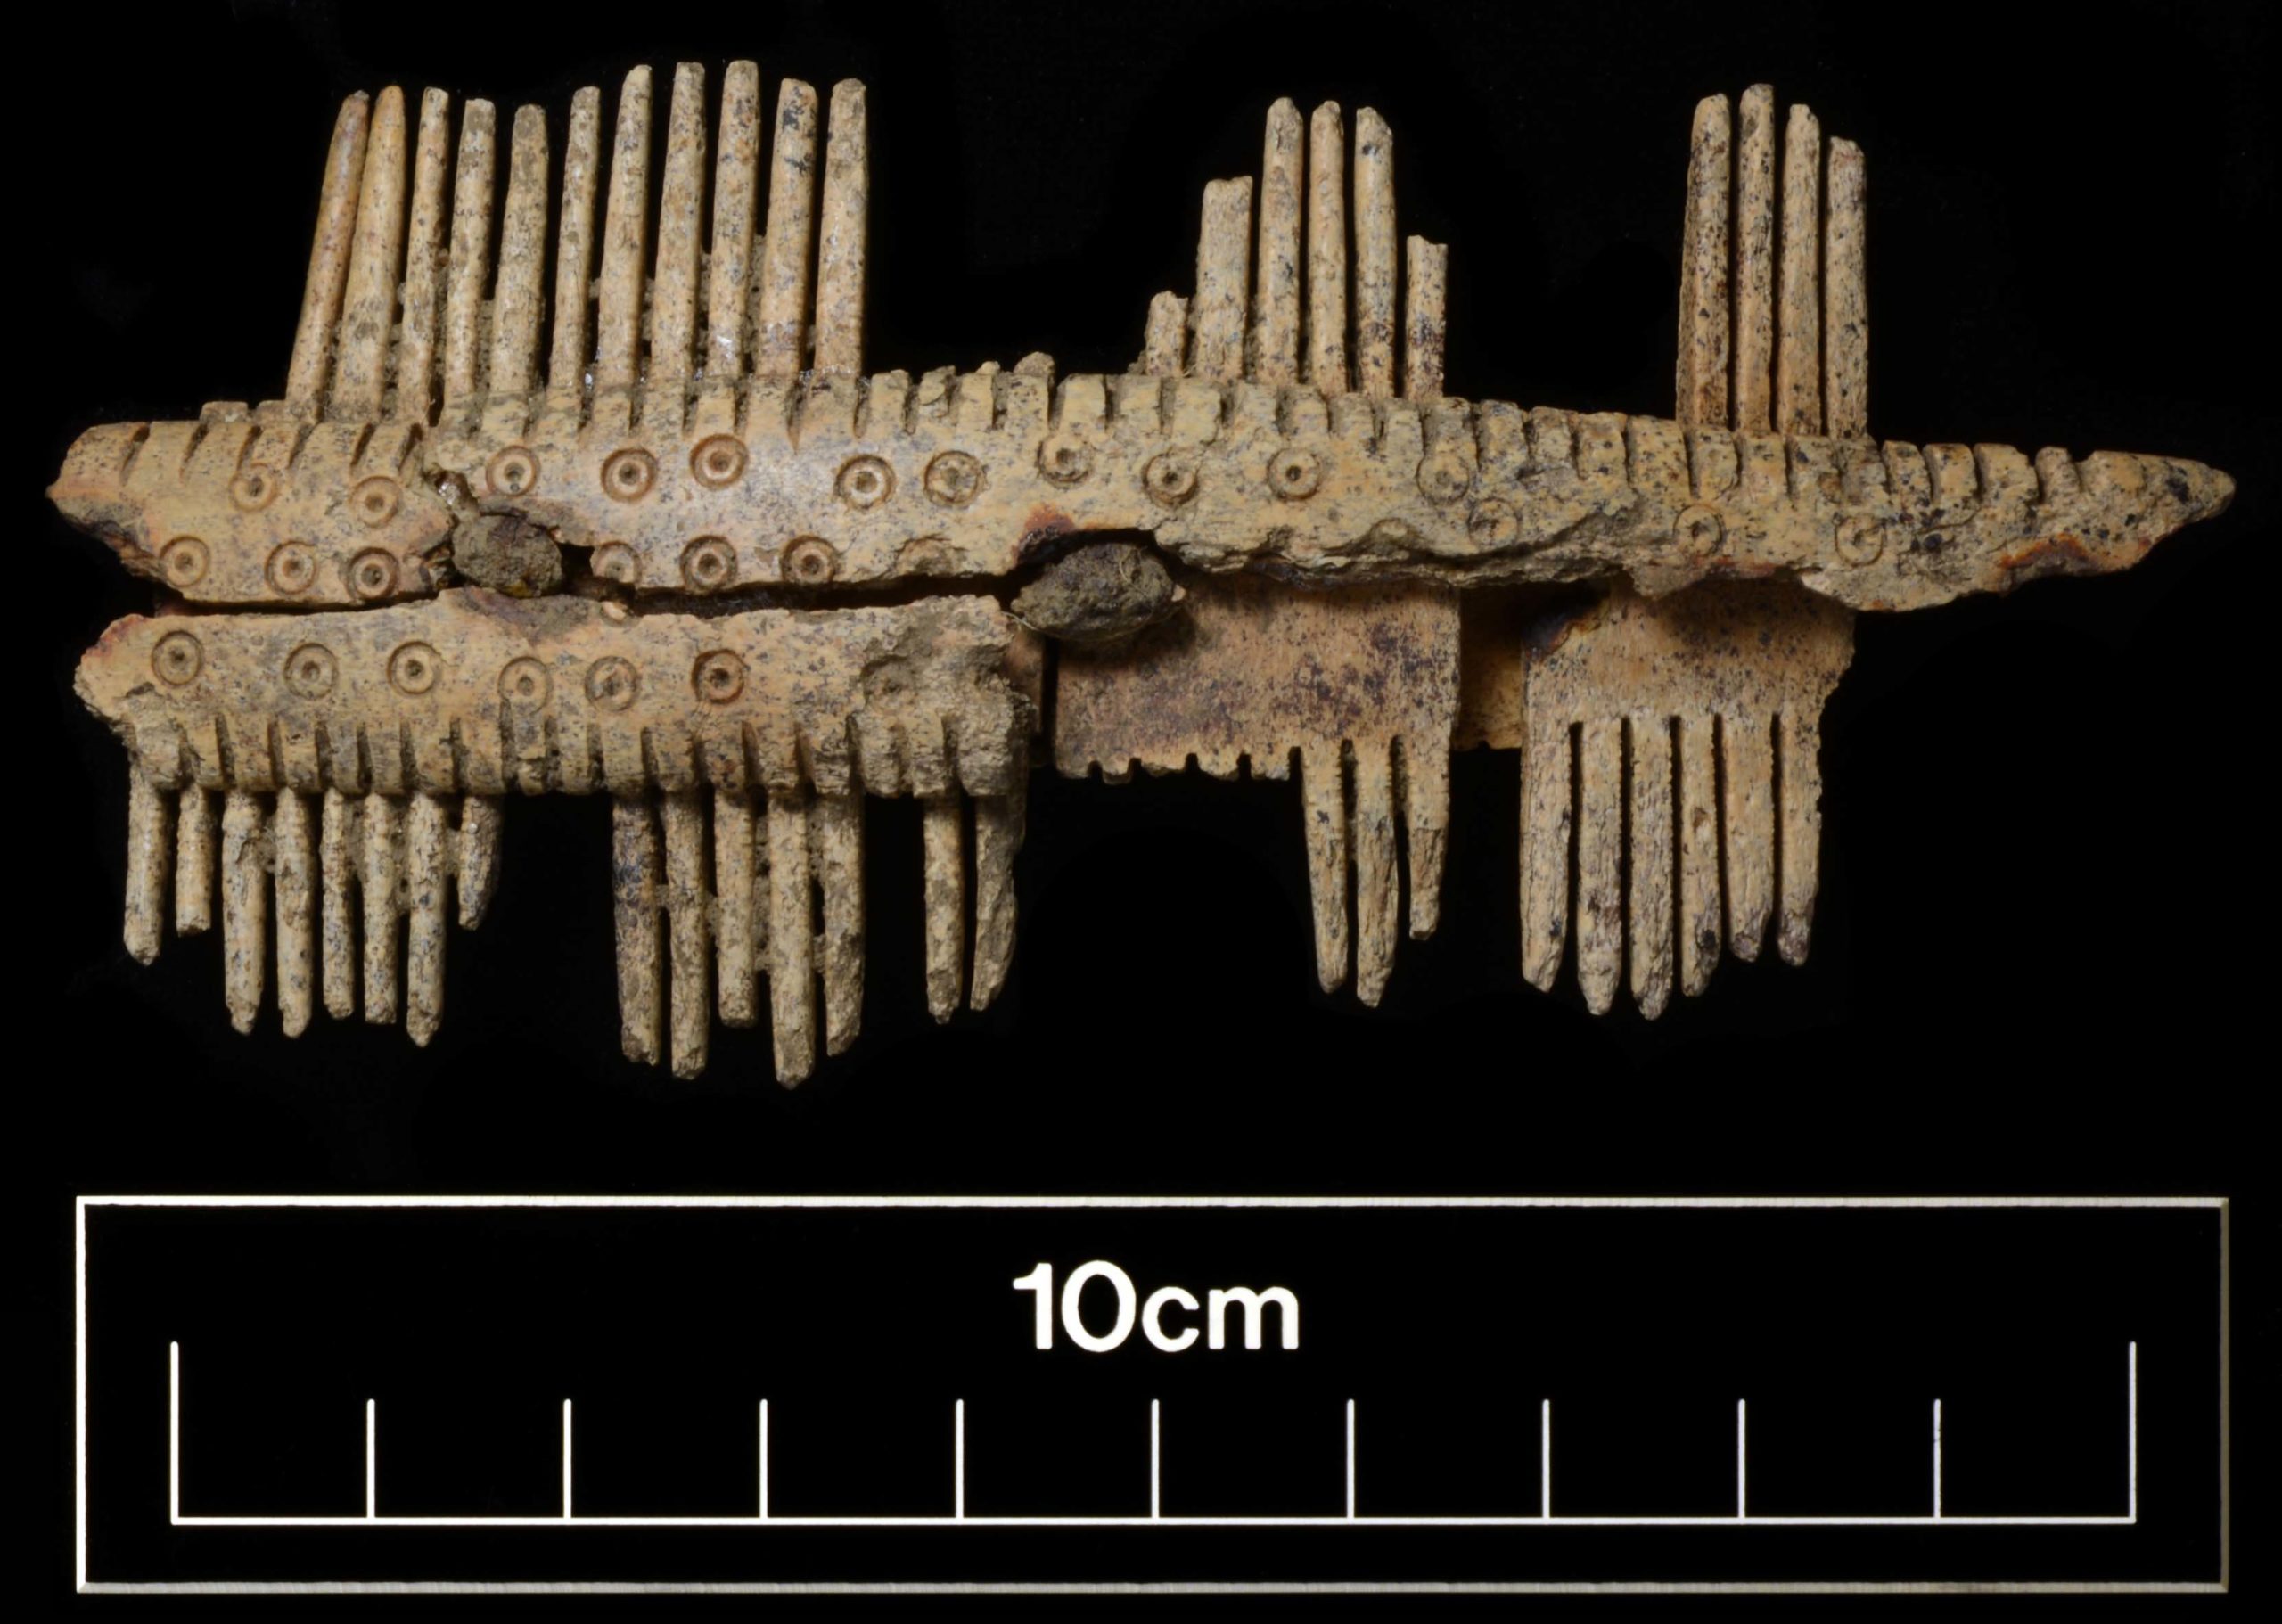 Anglo-Saxon comb - Albion Archaeology excavation in Fenstanton 2017-18